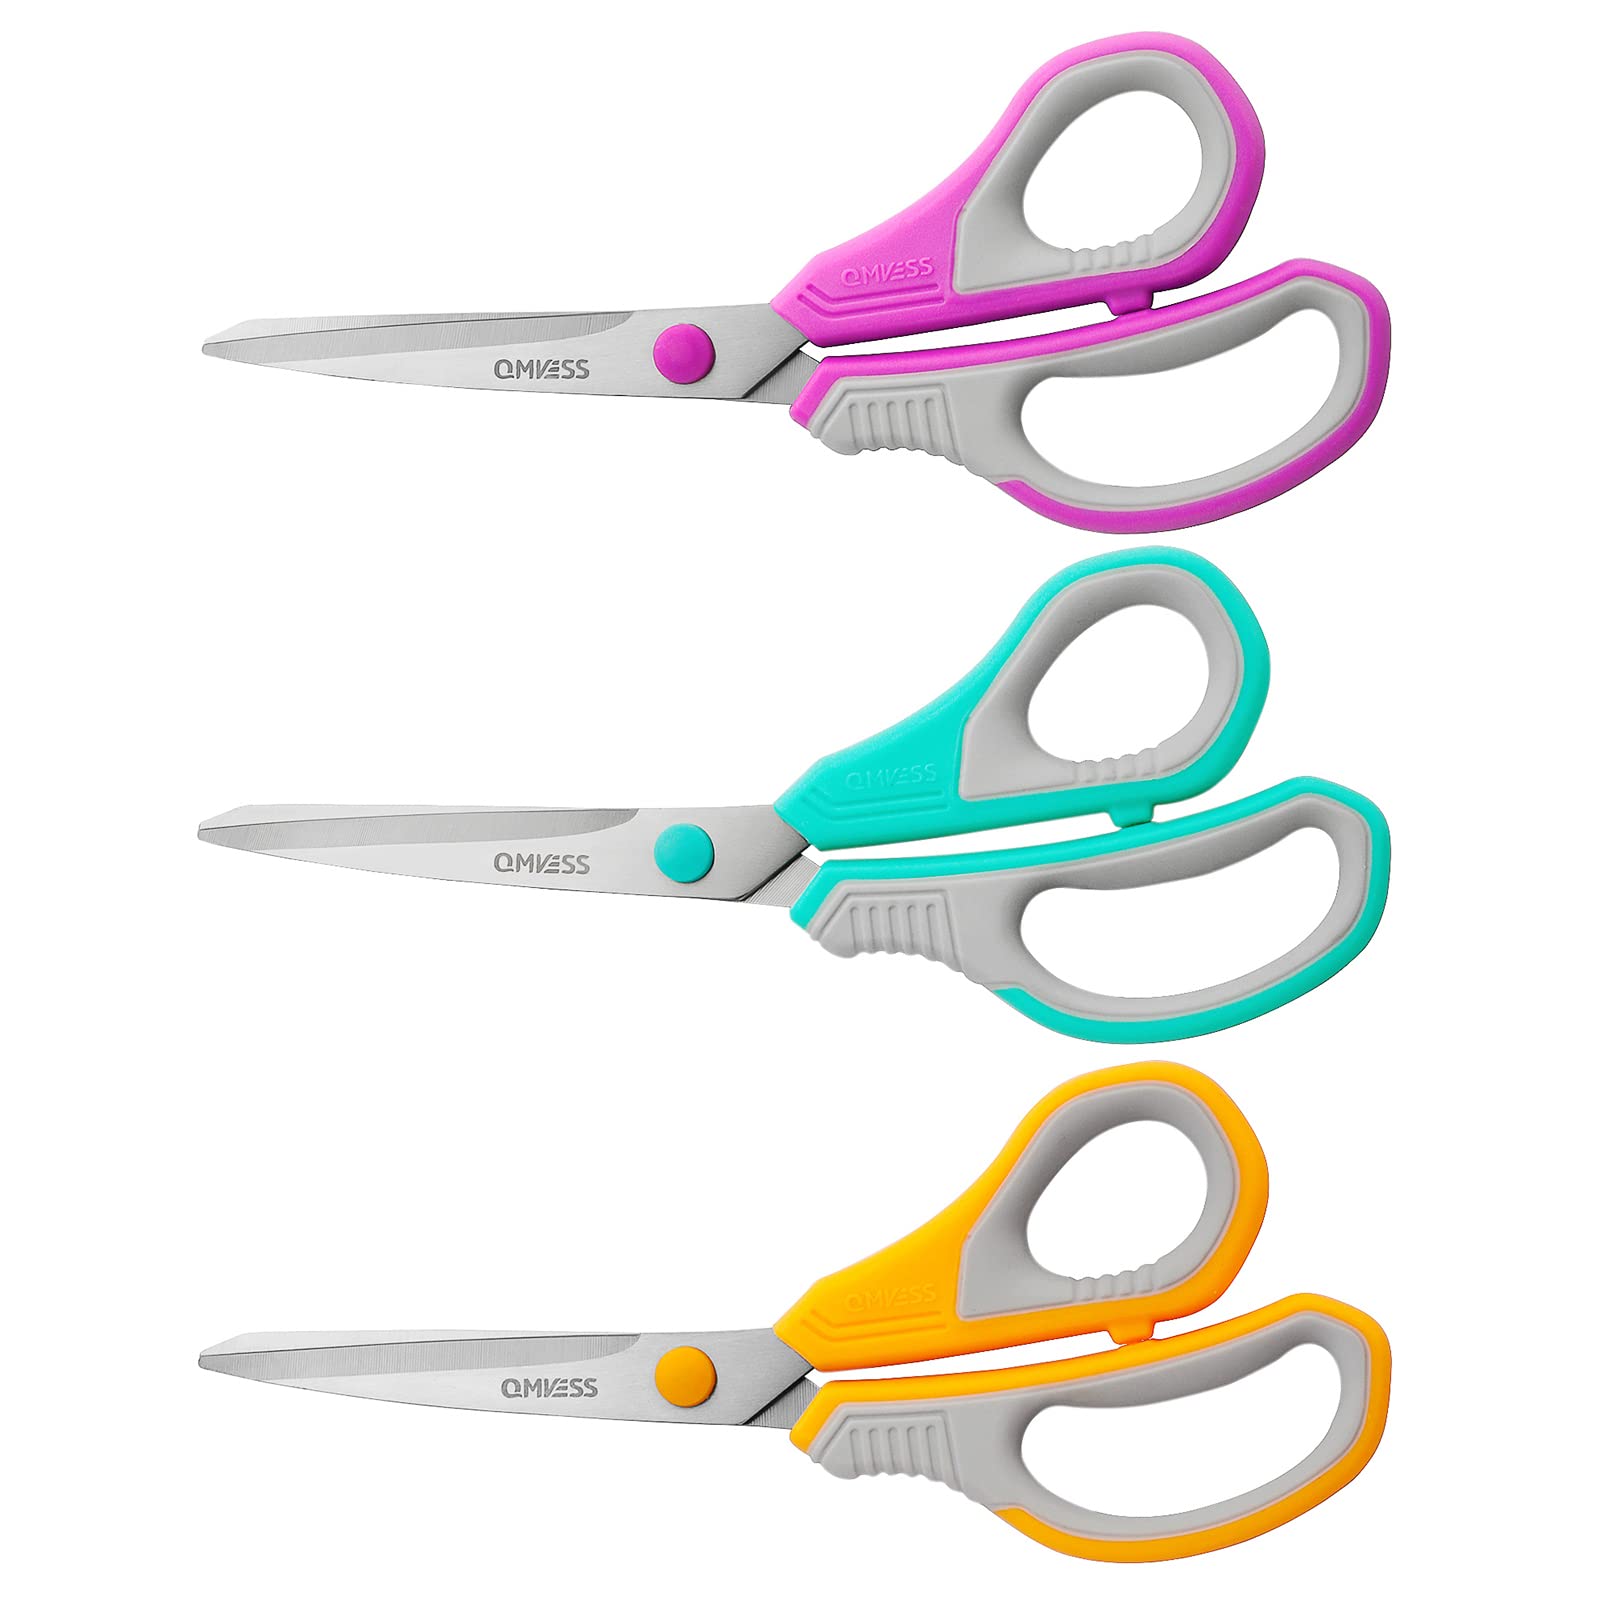 QMVESS 8.5 Scissors All Purpose 3 Pack, Ultra Sharp Multipurpose